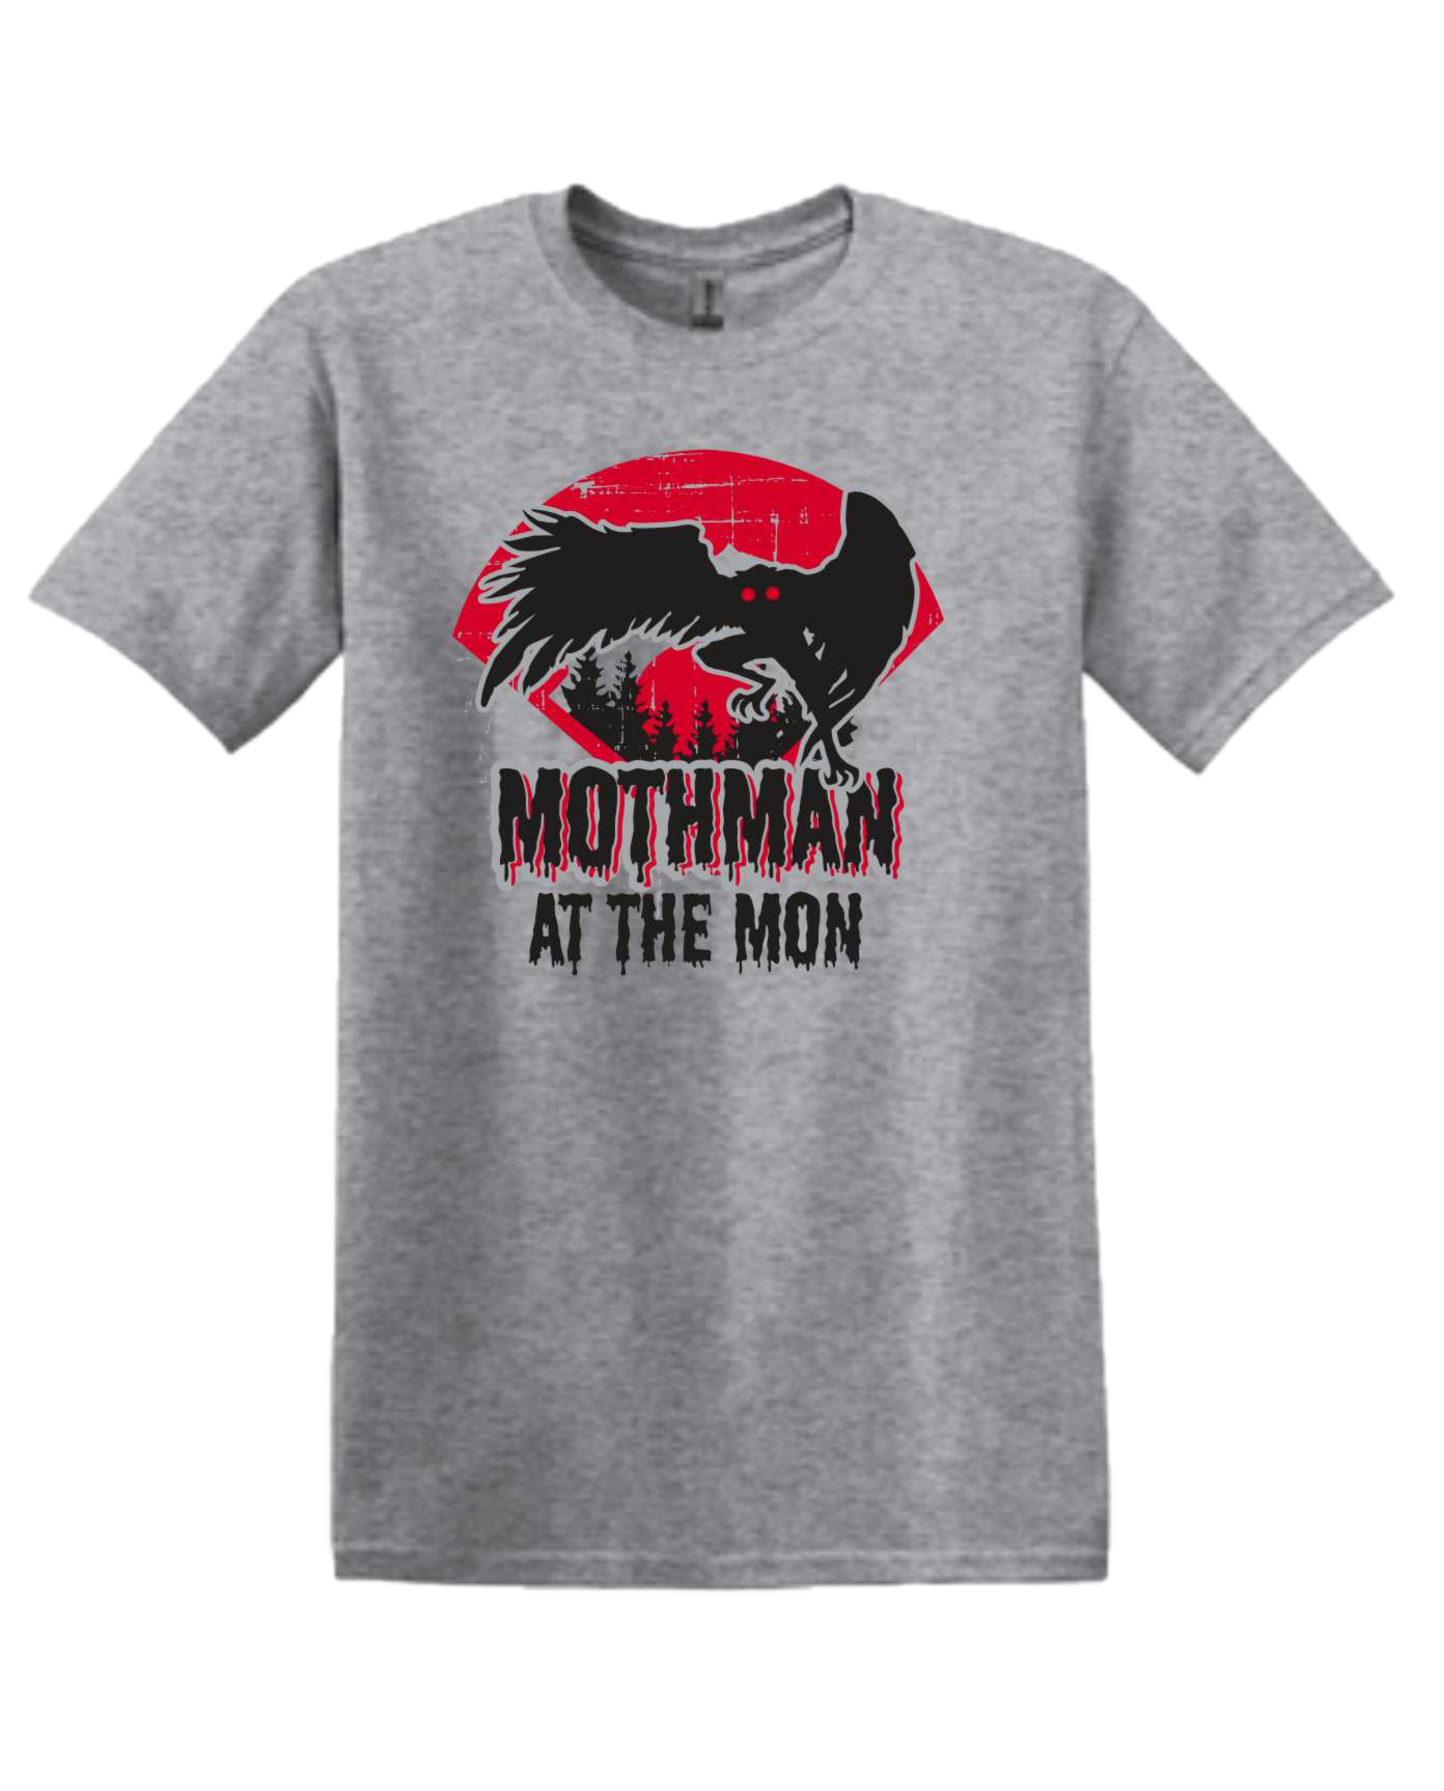 West Virginia Black Bears Youth Grey Mothman T-Shirt